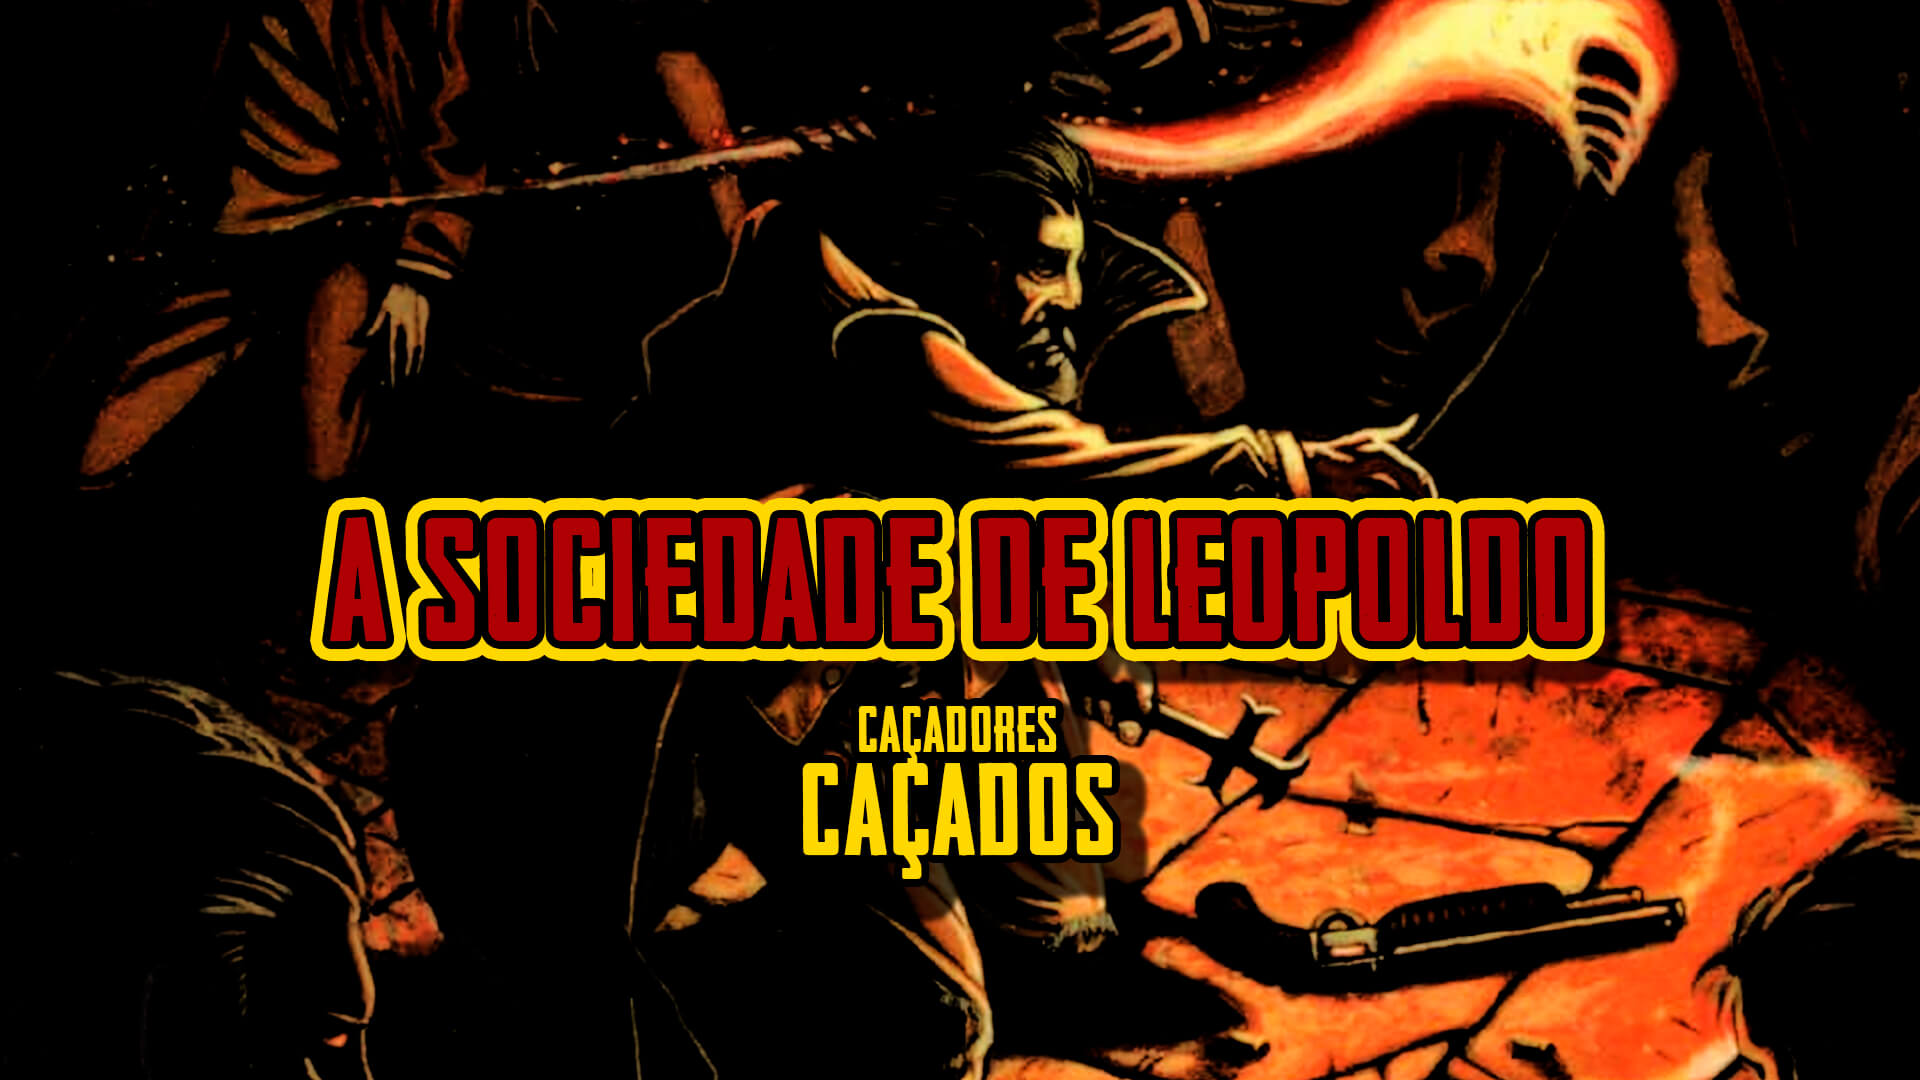 A Sociedade de Leopoldo: Os Caçadores Caçados